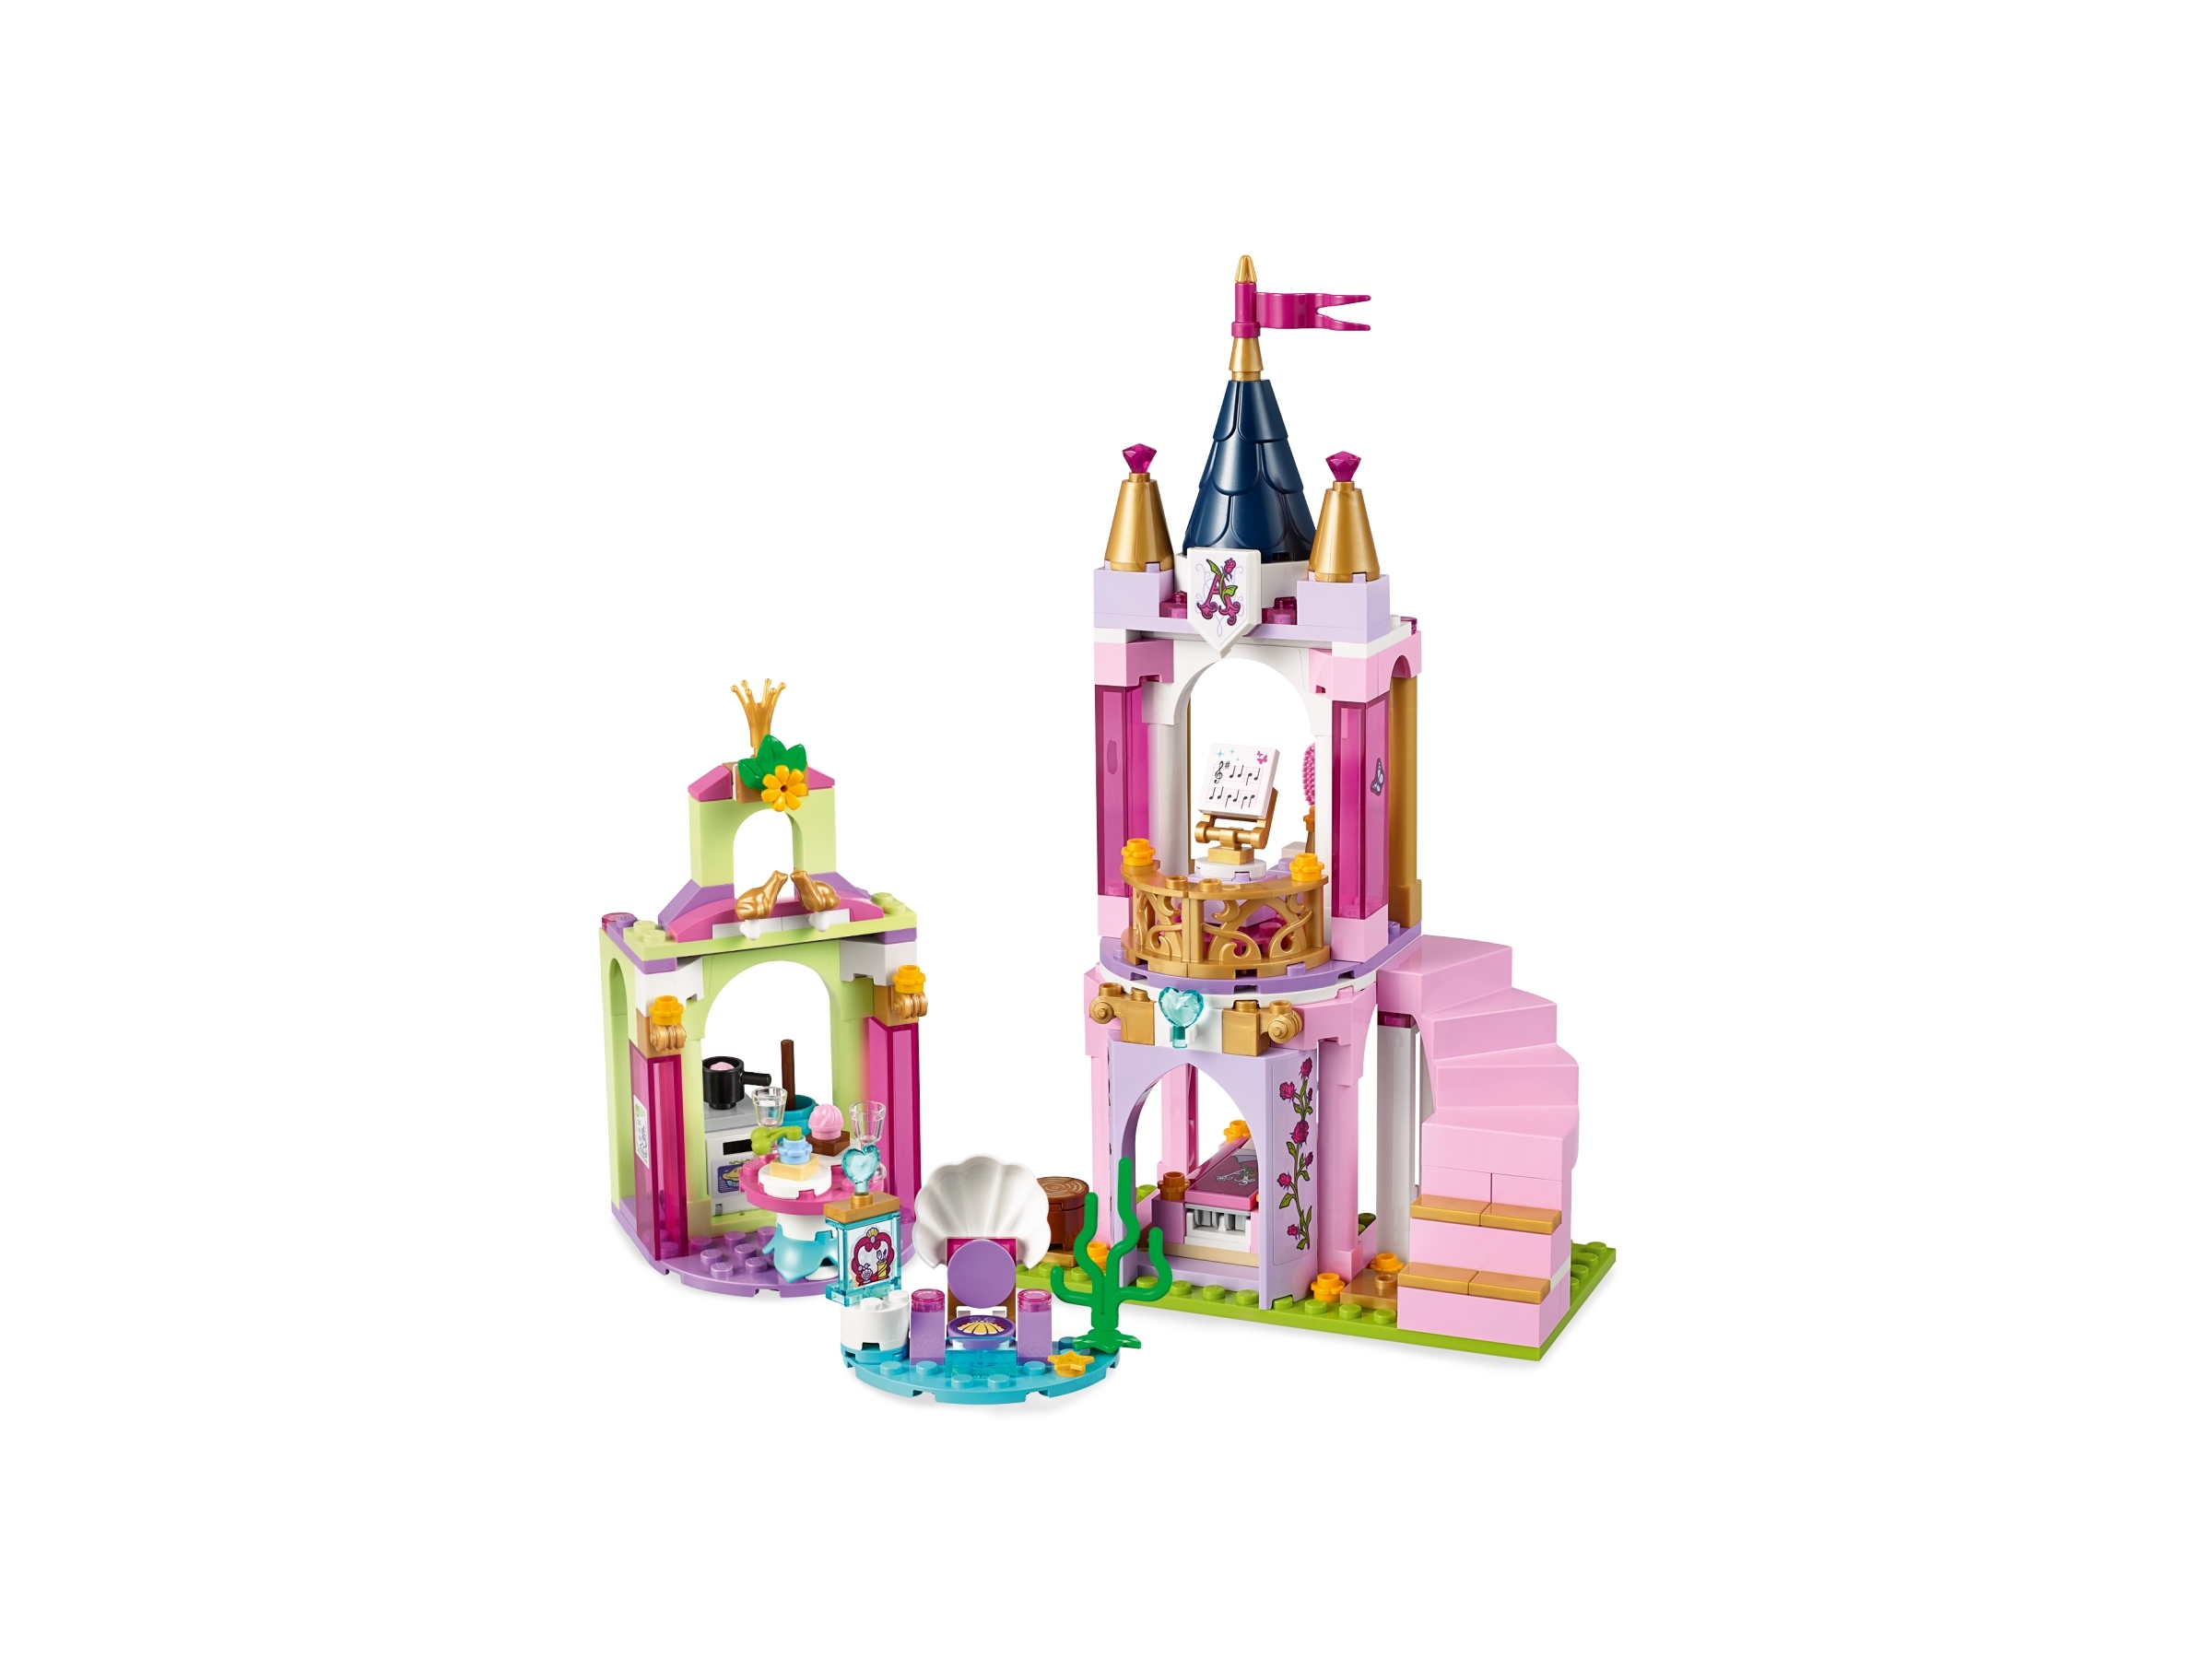 New 2019 Ariel and Tiana’s Royal Celebration 41162 Building Kit 282 Pieces LEGO Disney Aurora